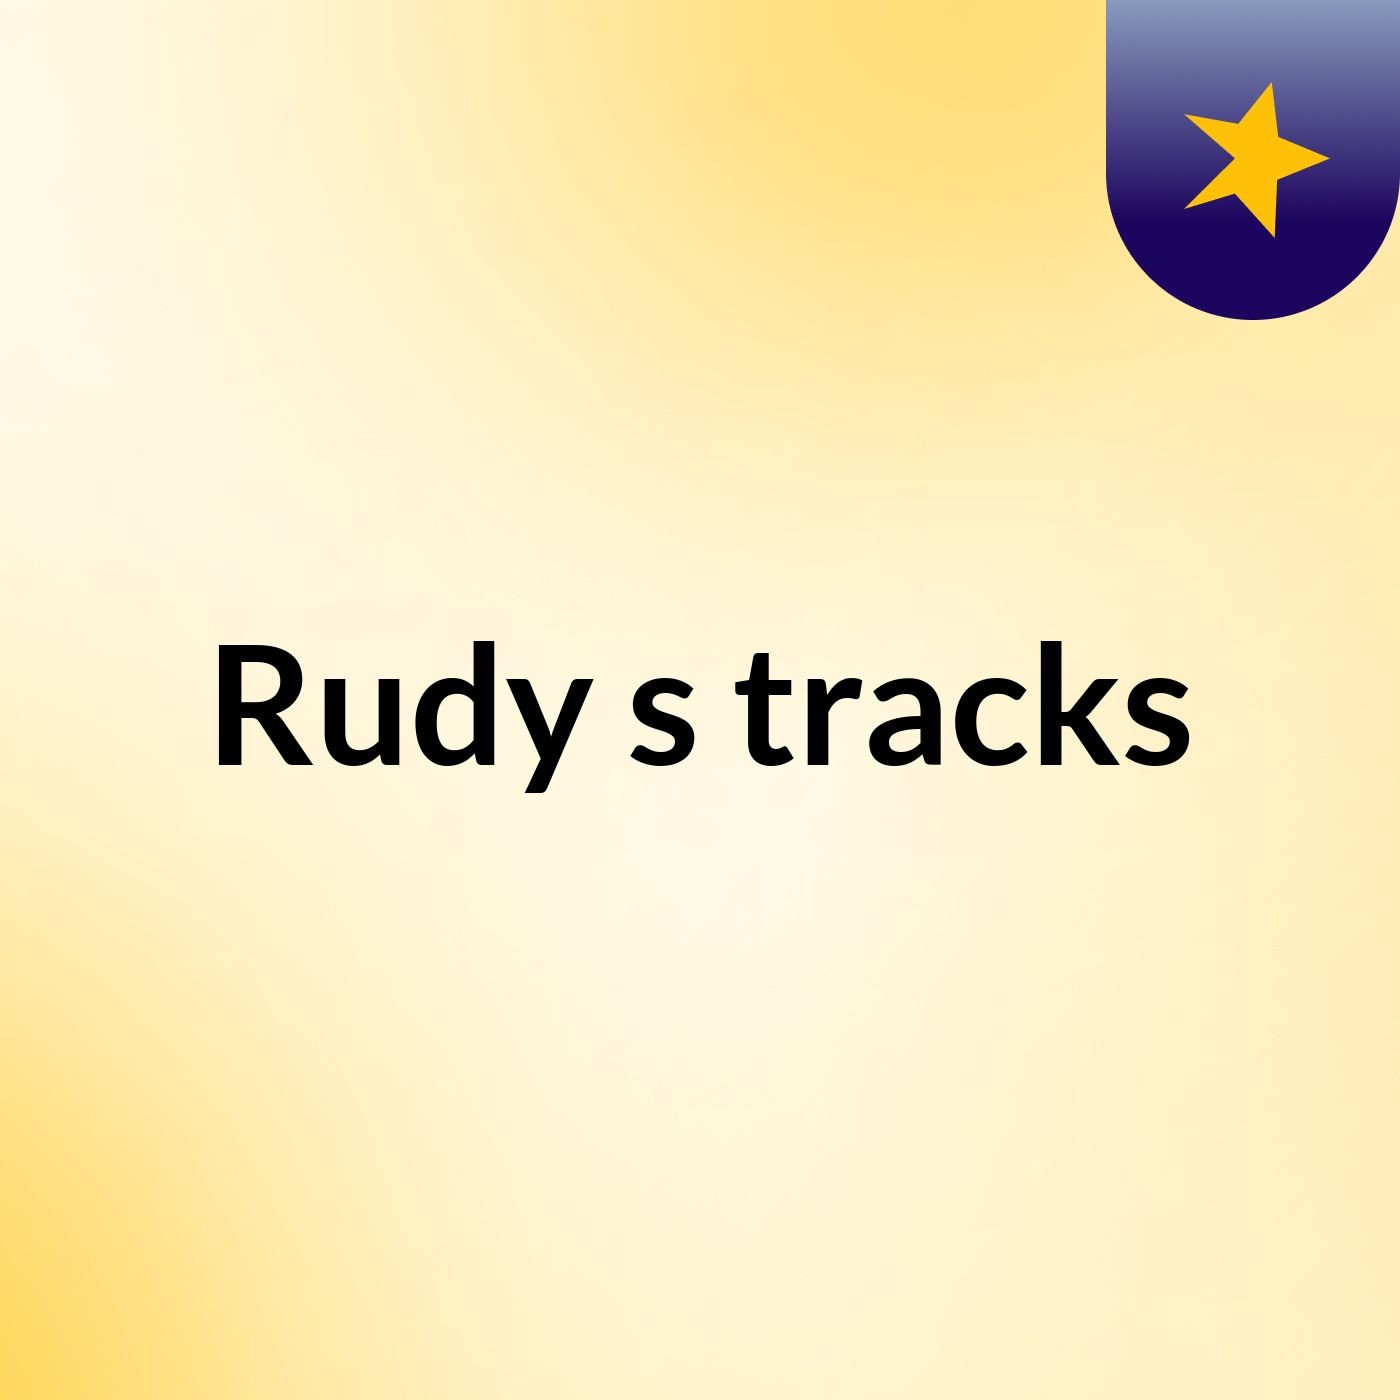 Rudy's tracks